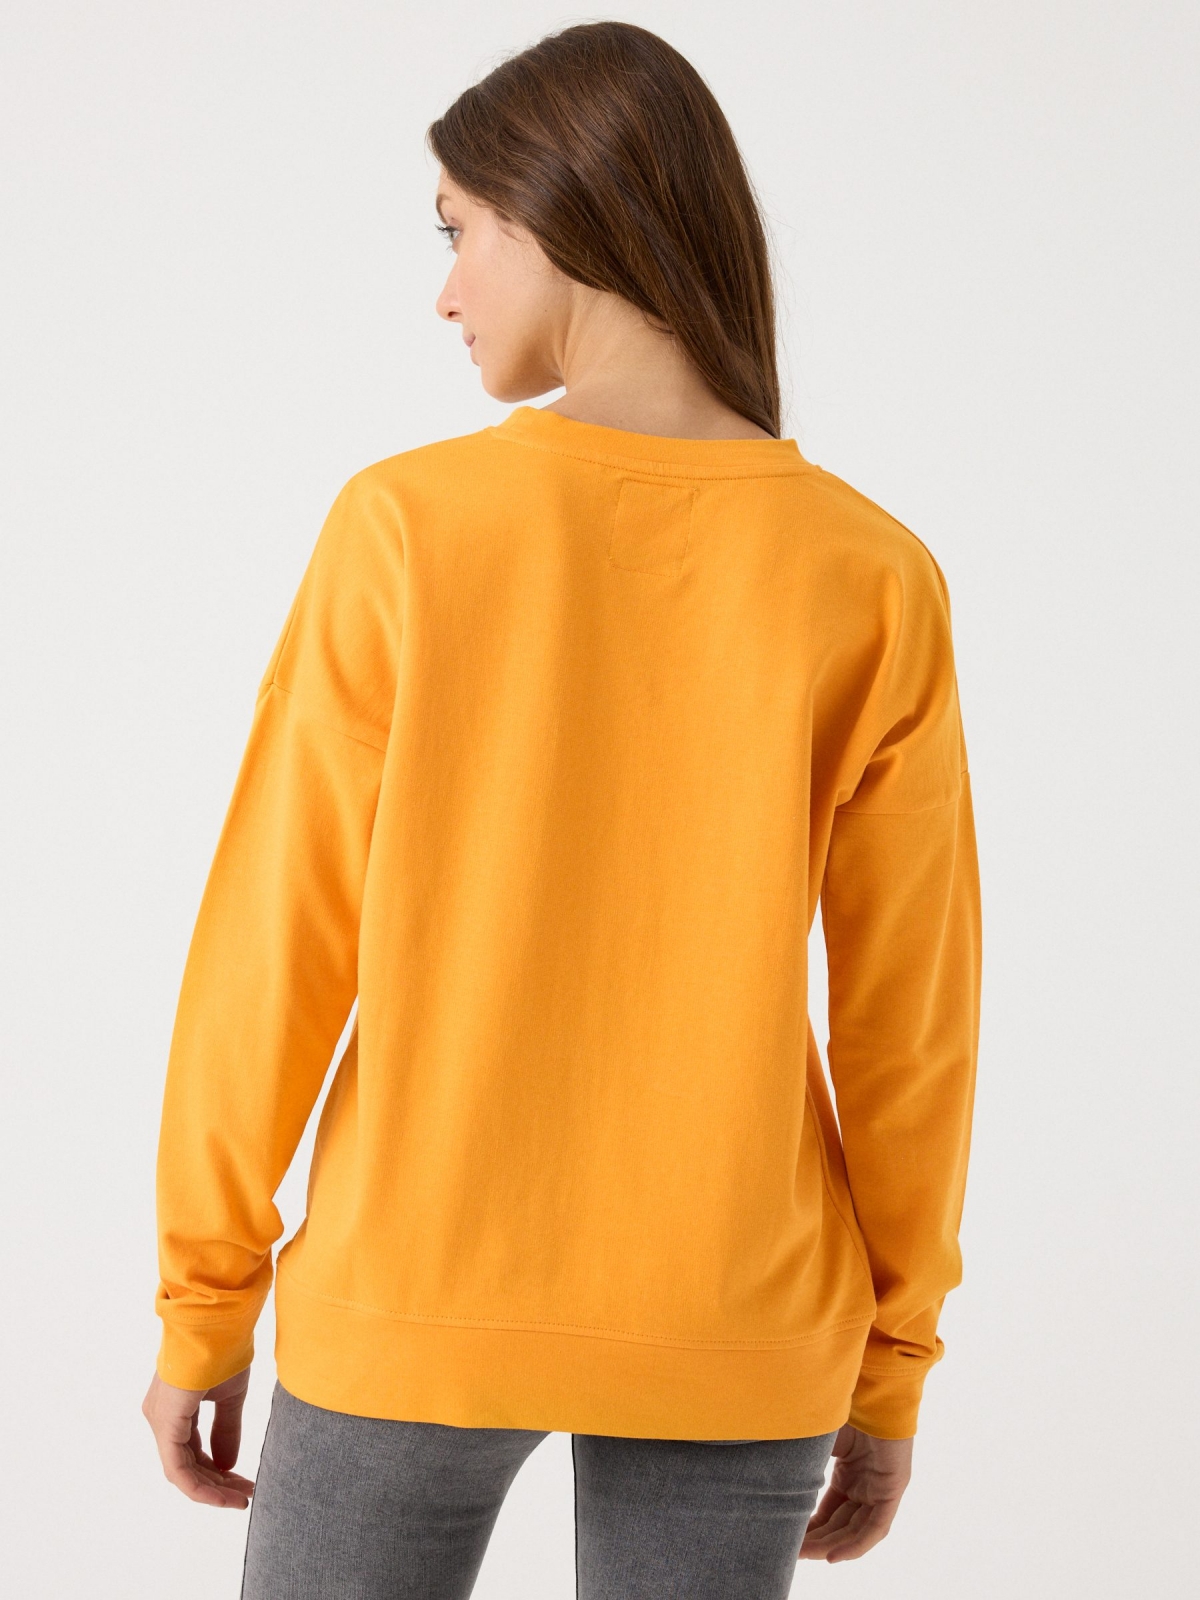 Basic round neck sweatshirt yellow middle back view